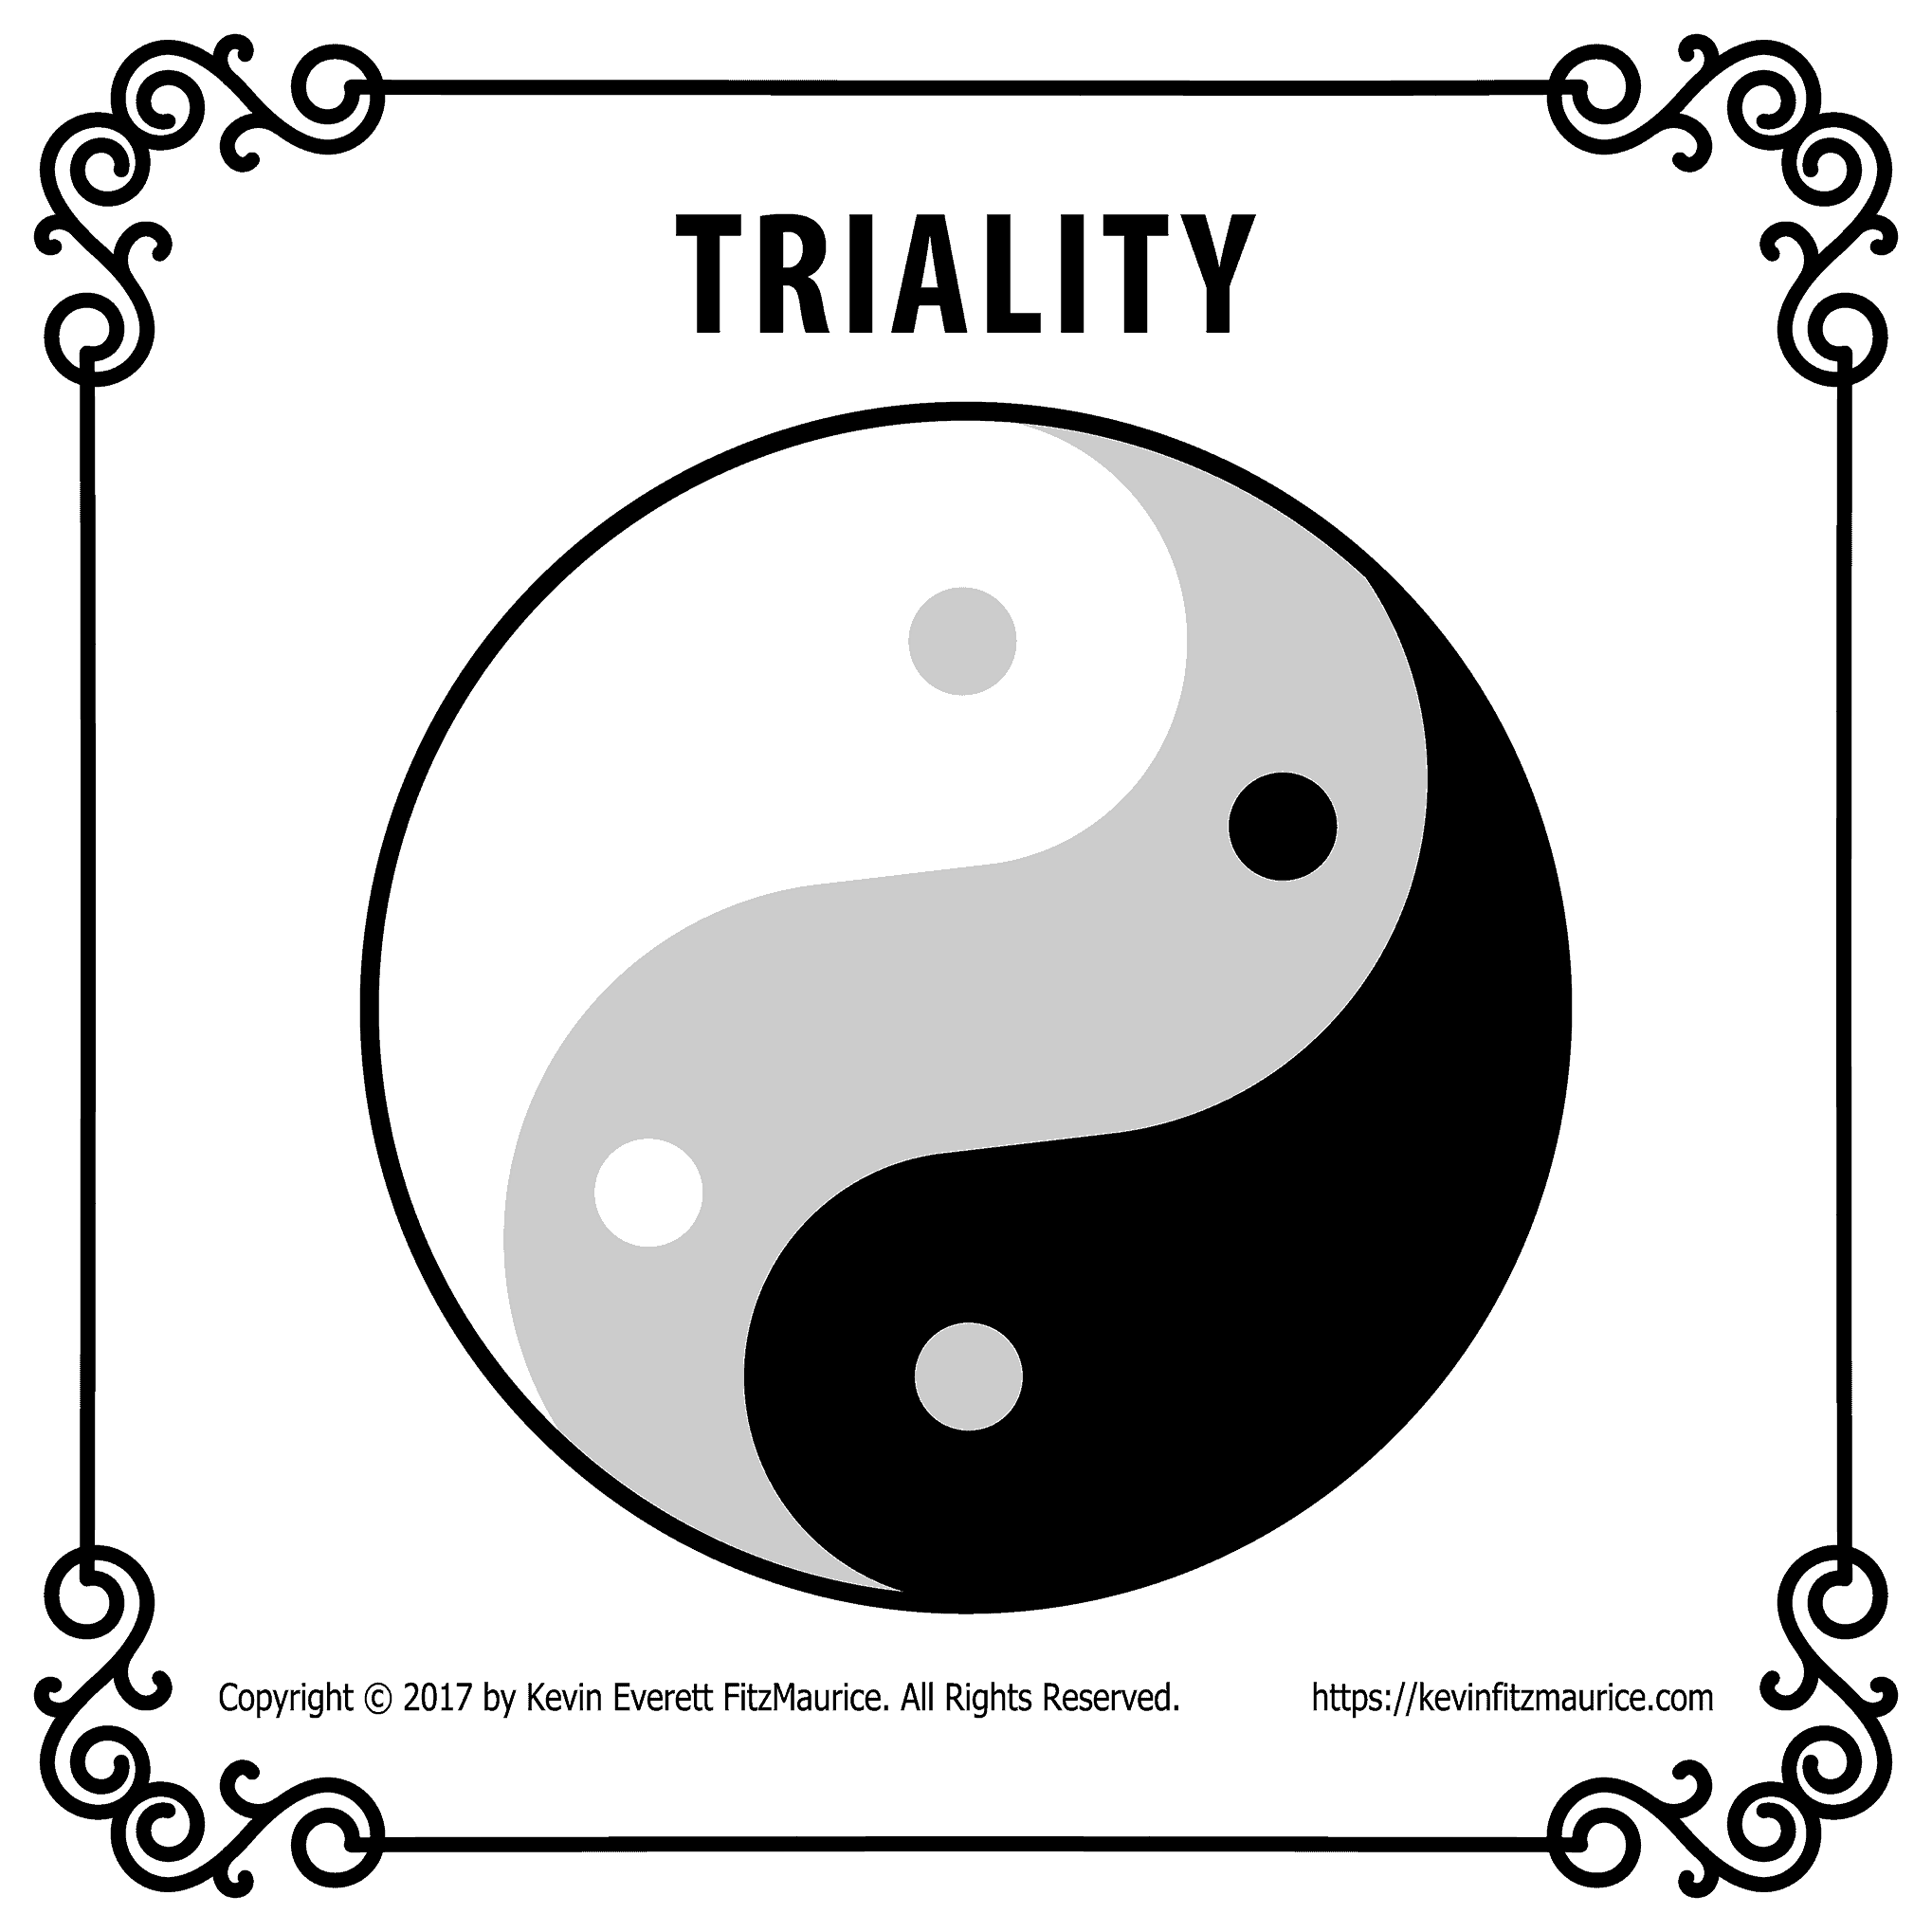 Triality Overcomes Duality